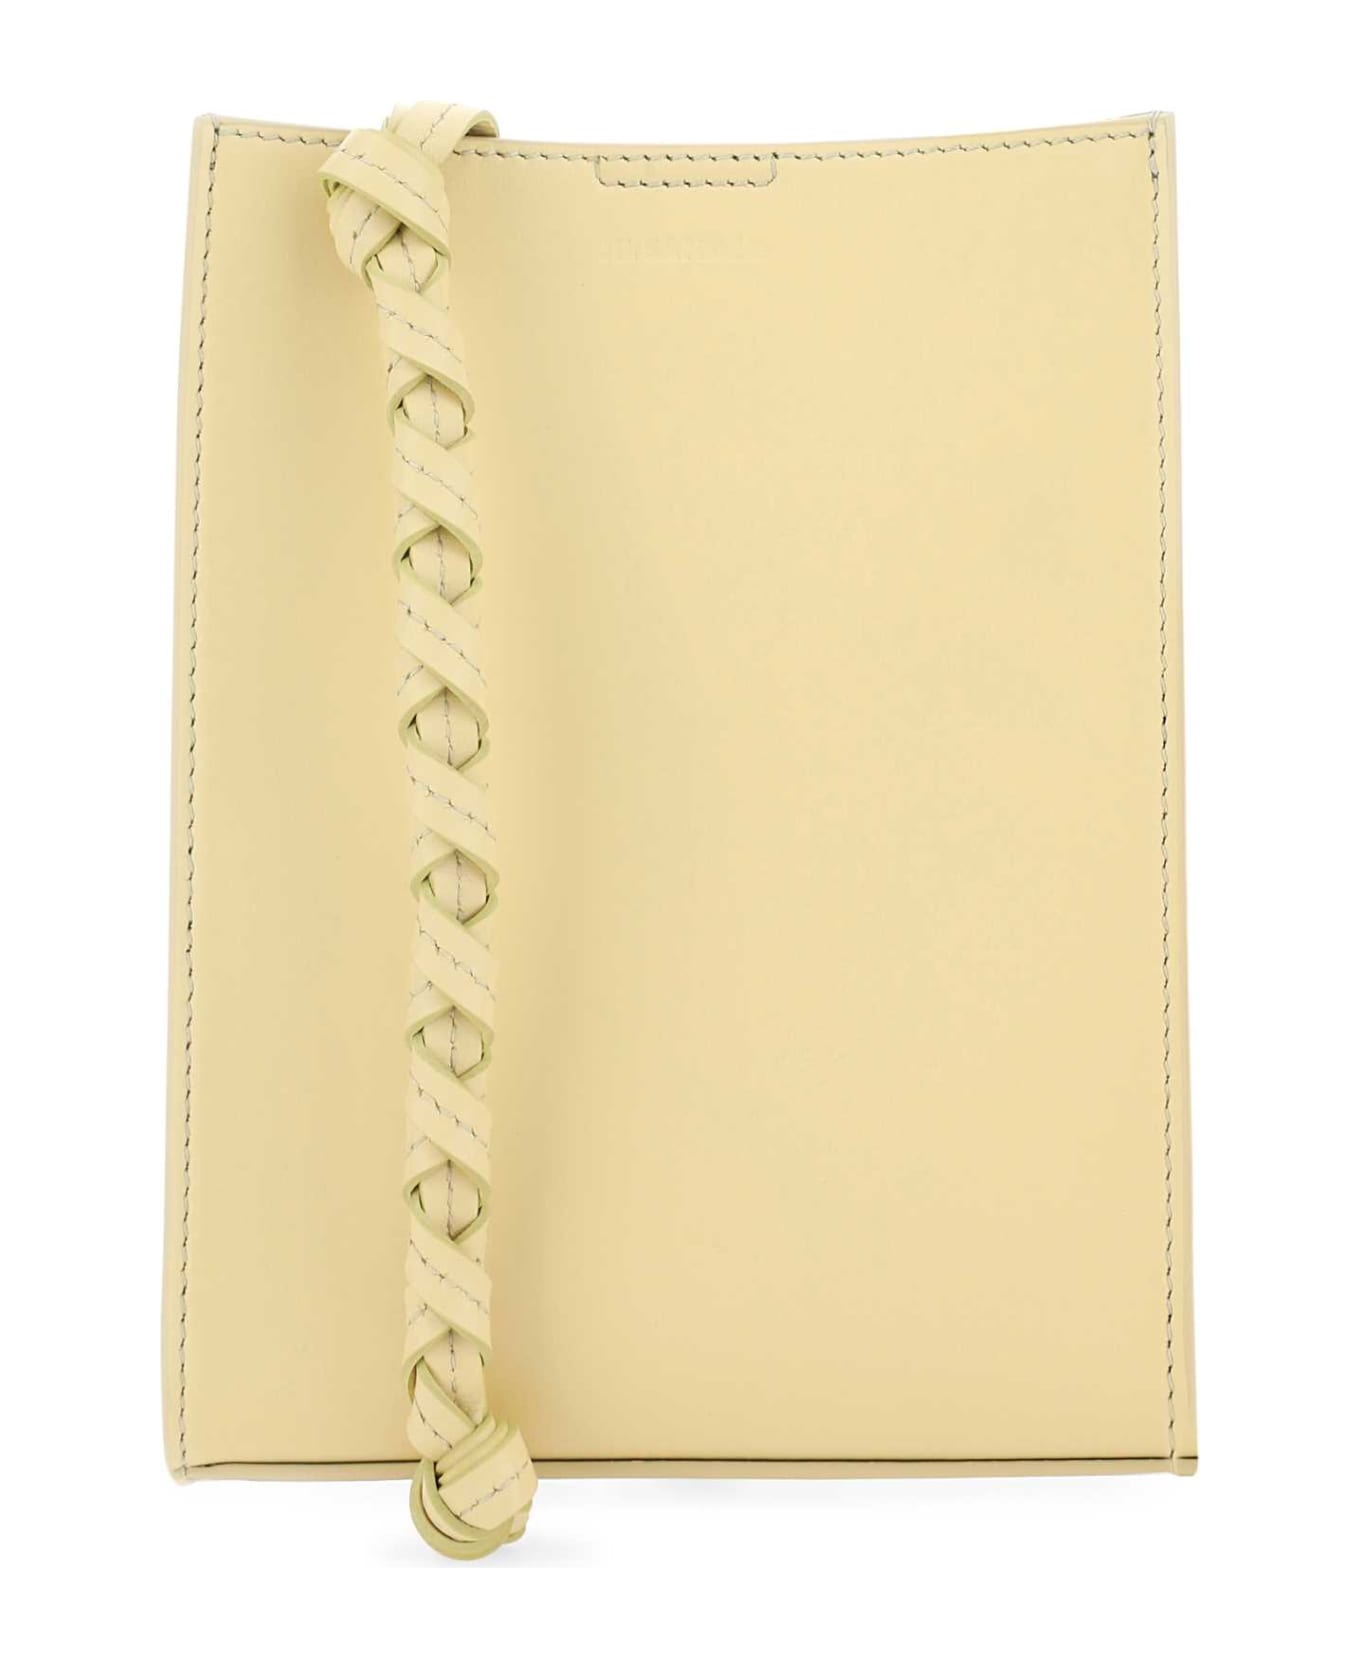 Jil Sander Pastel Yellow Leather Small Tangle Shoulder Bag - 723